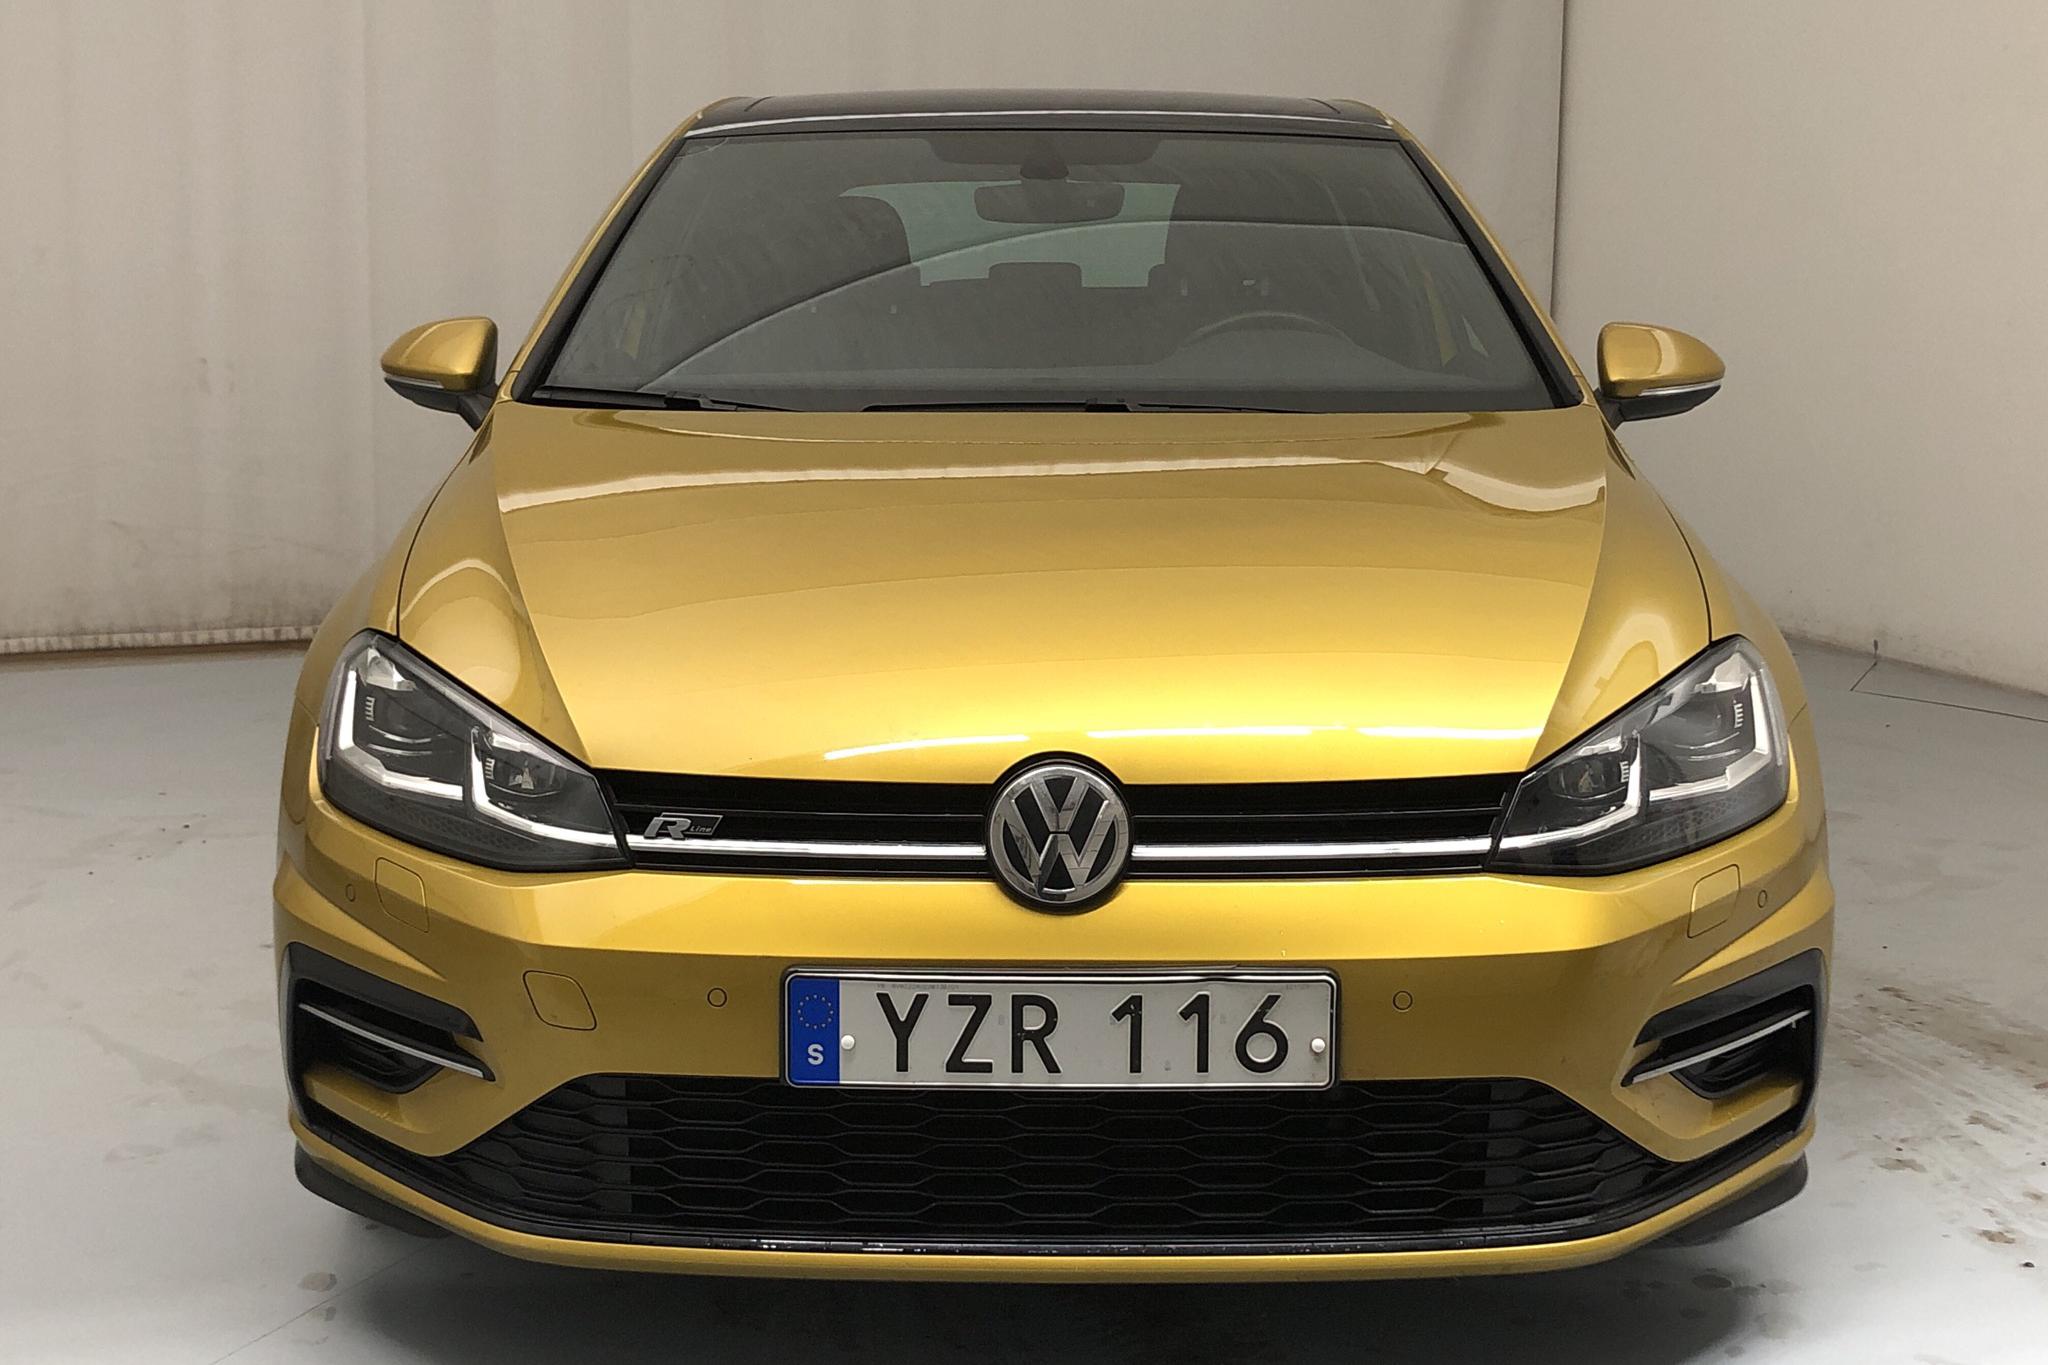 VW Golf VII 1.4 TSI 5dr (150hk) - 36 150 km - Automatic - yellow - 2018